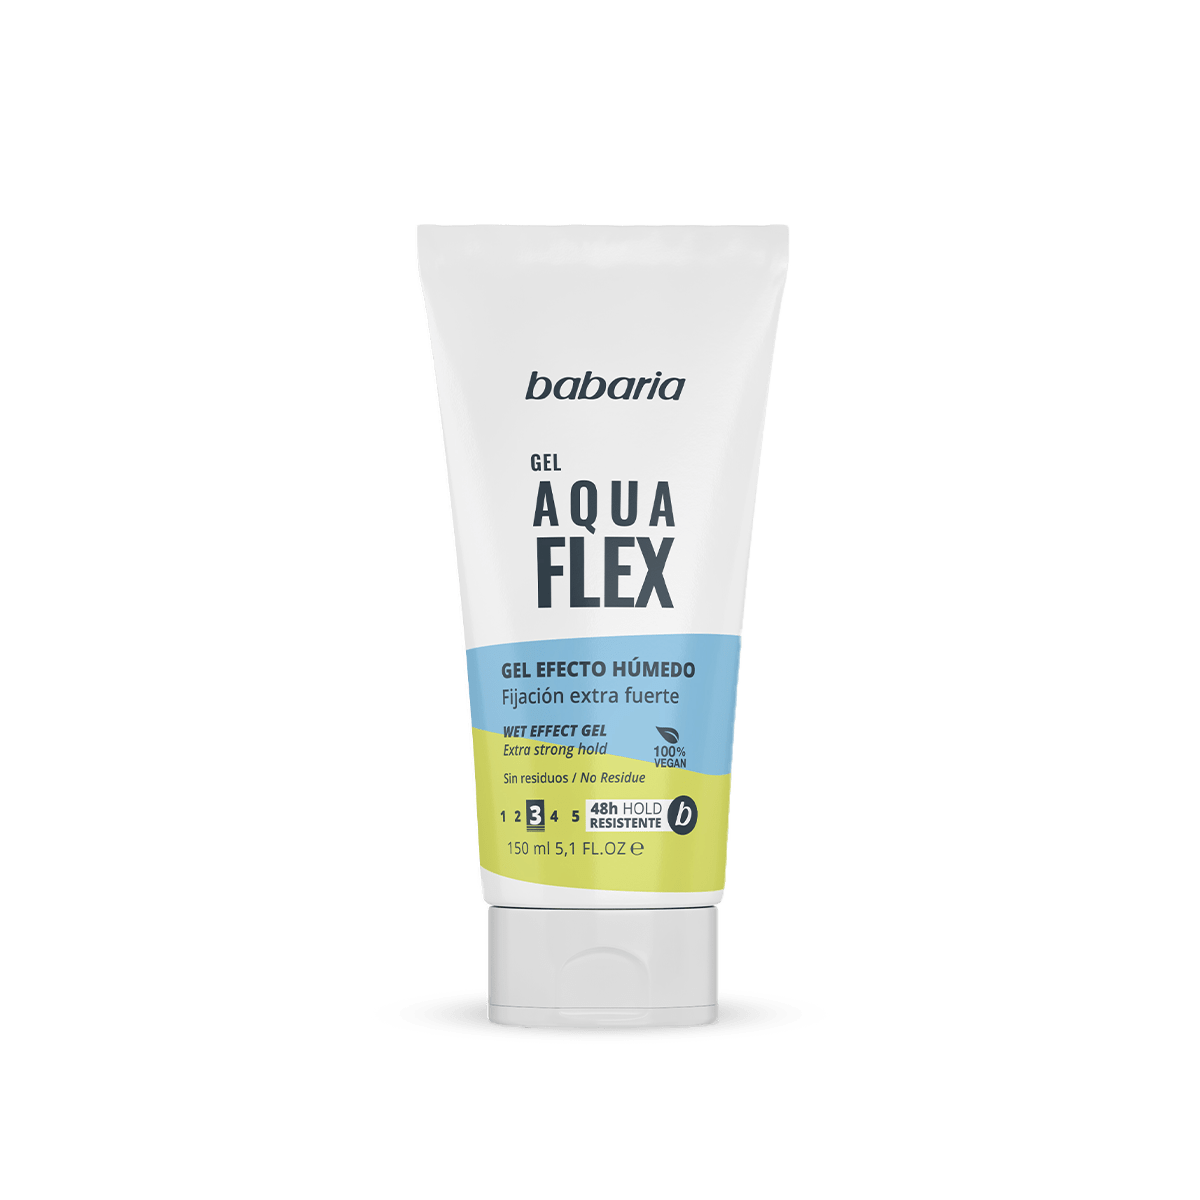 Aqua Flex Hair Gel